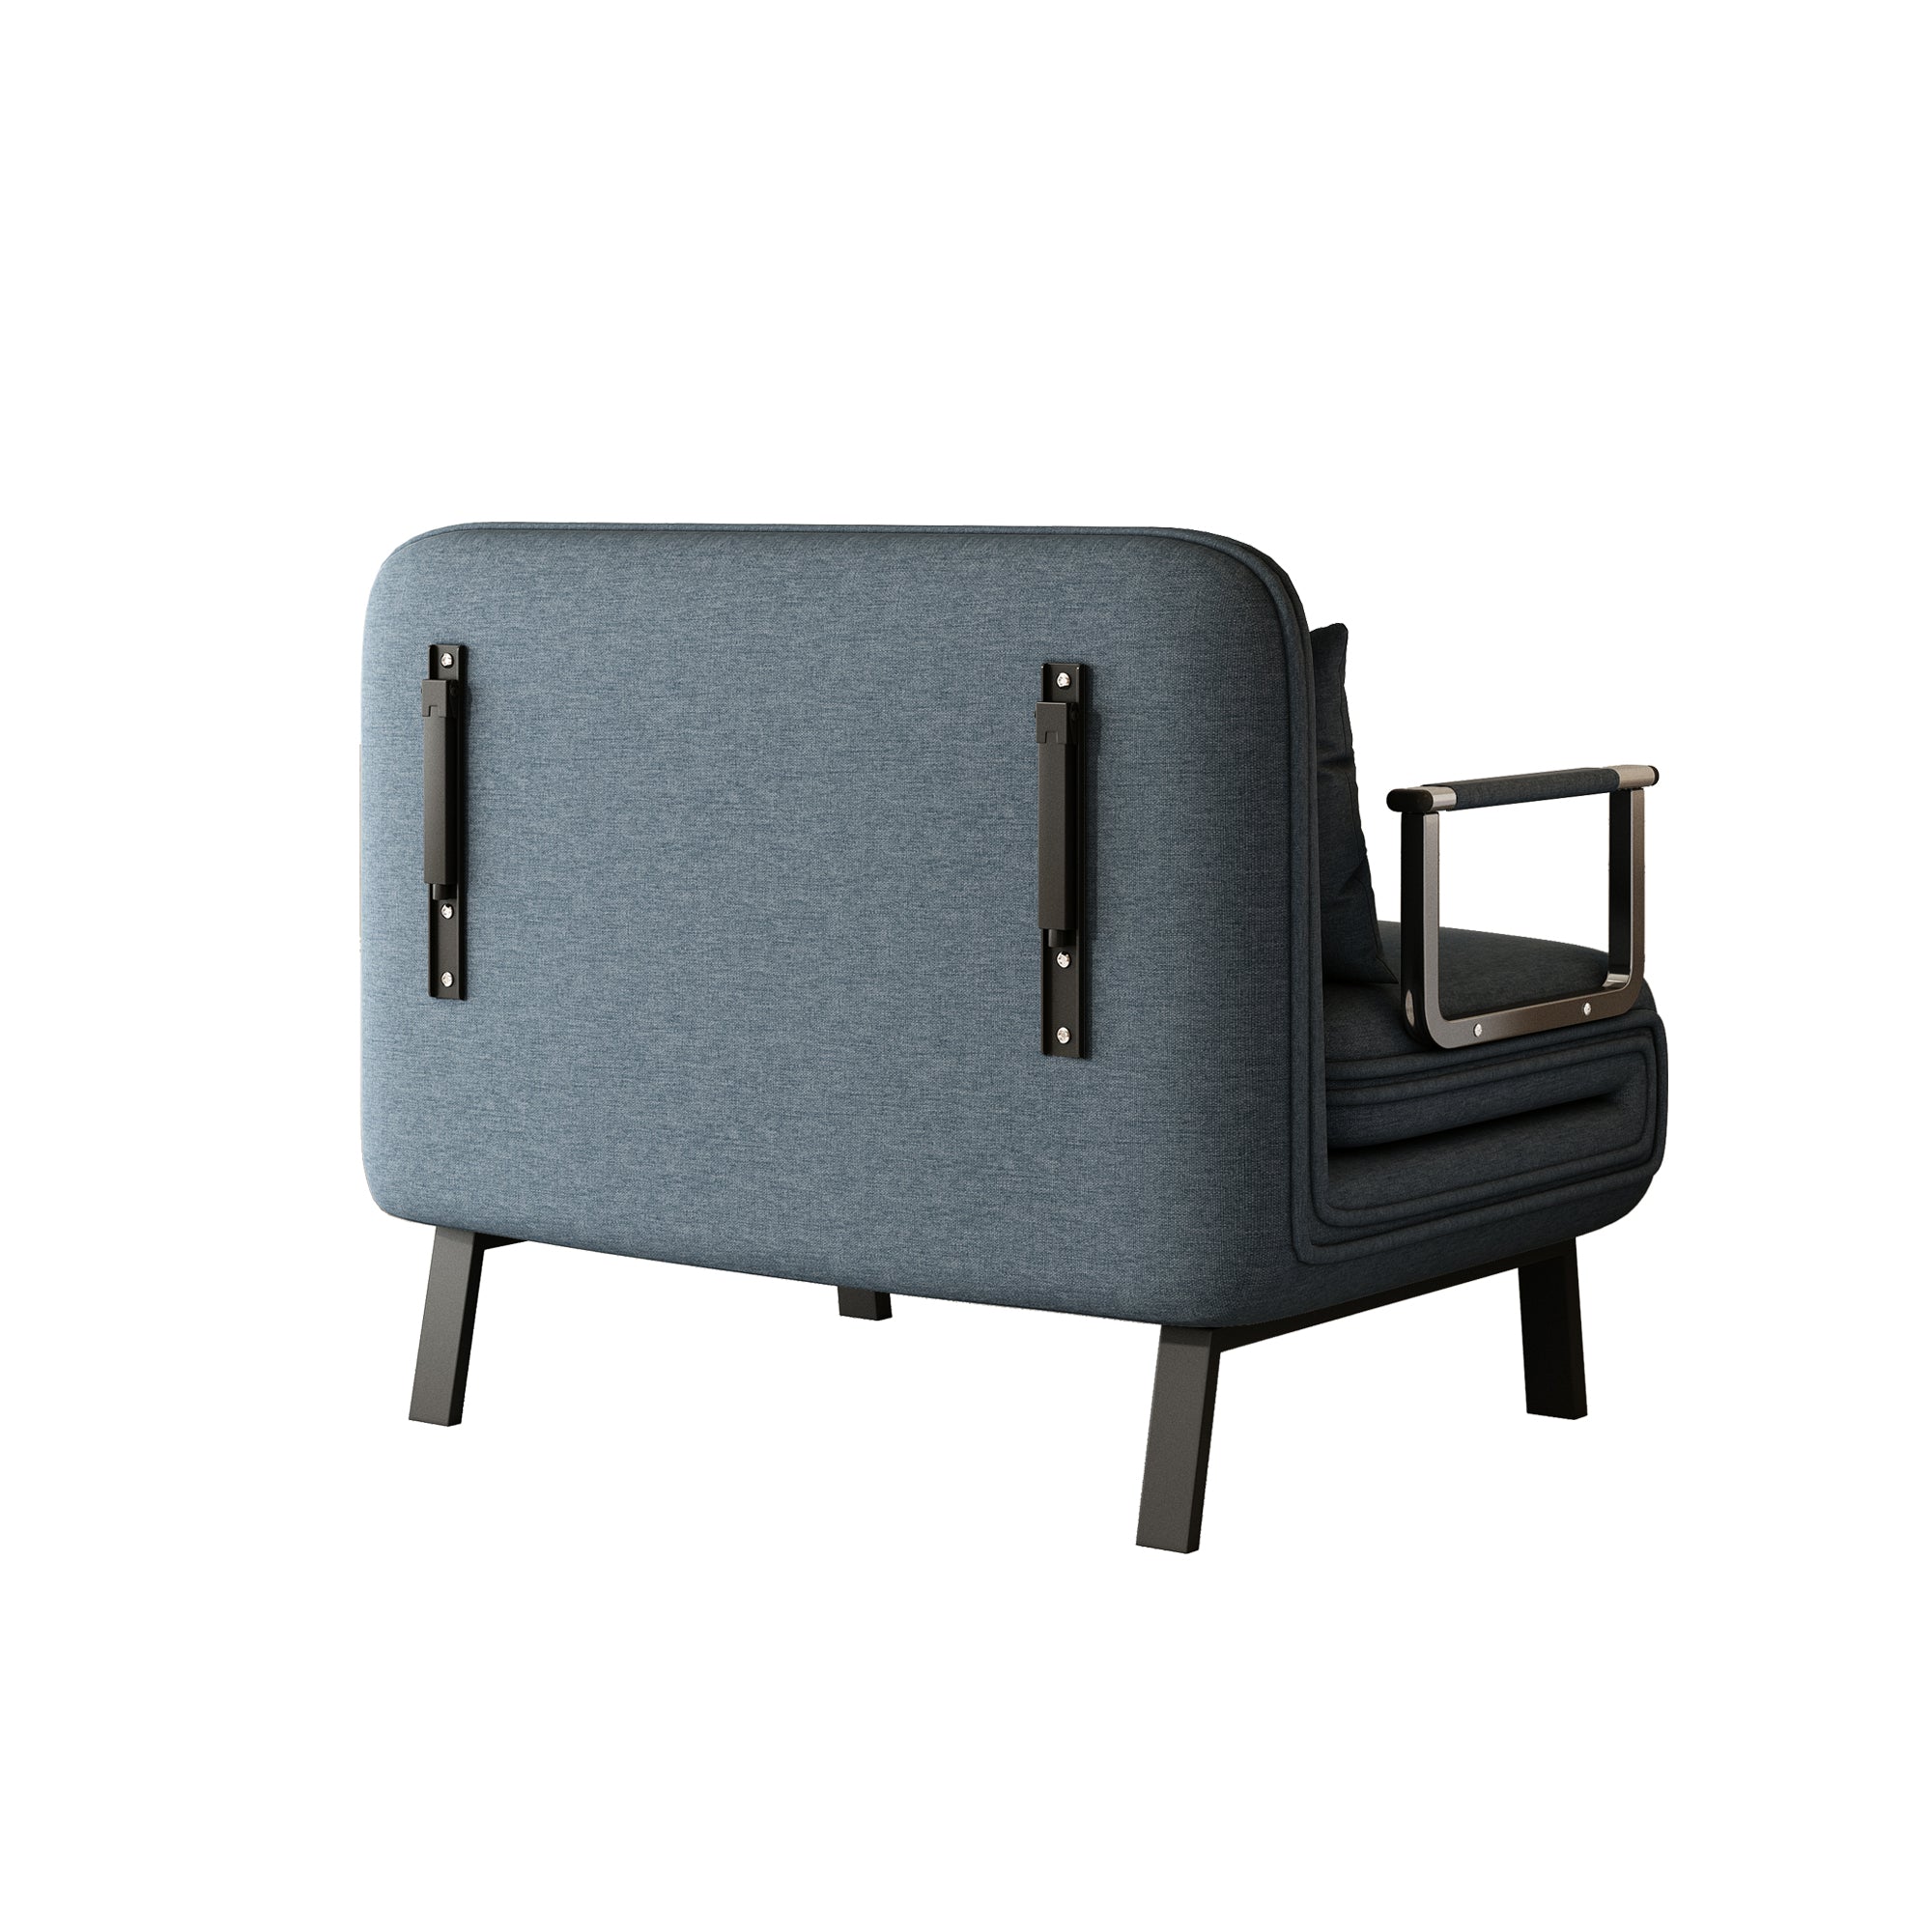 Bellemave® Tri-Fold Sofa Bed with Adjustable Backrest & Pillow, with Sturdy Steel Frame Bellemave®